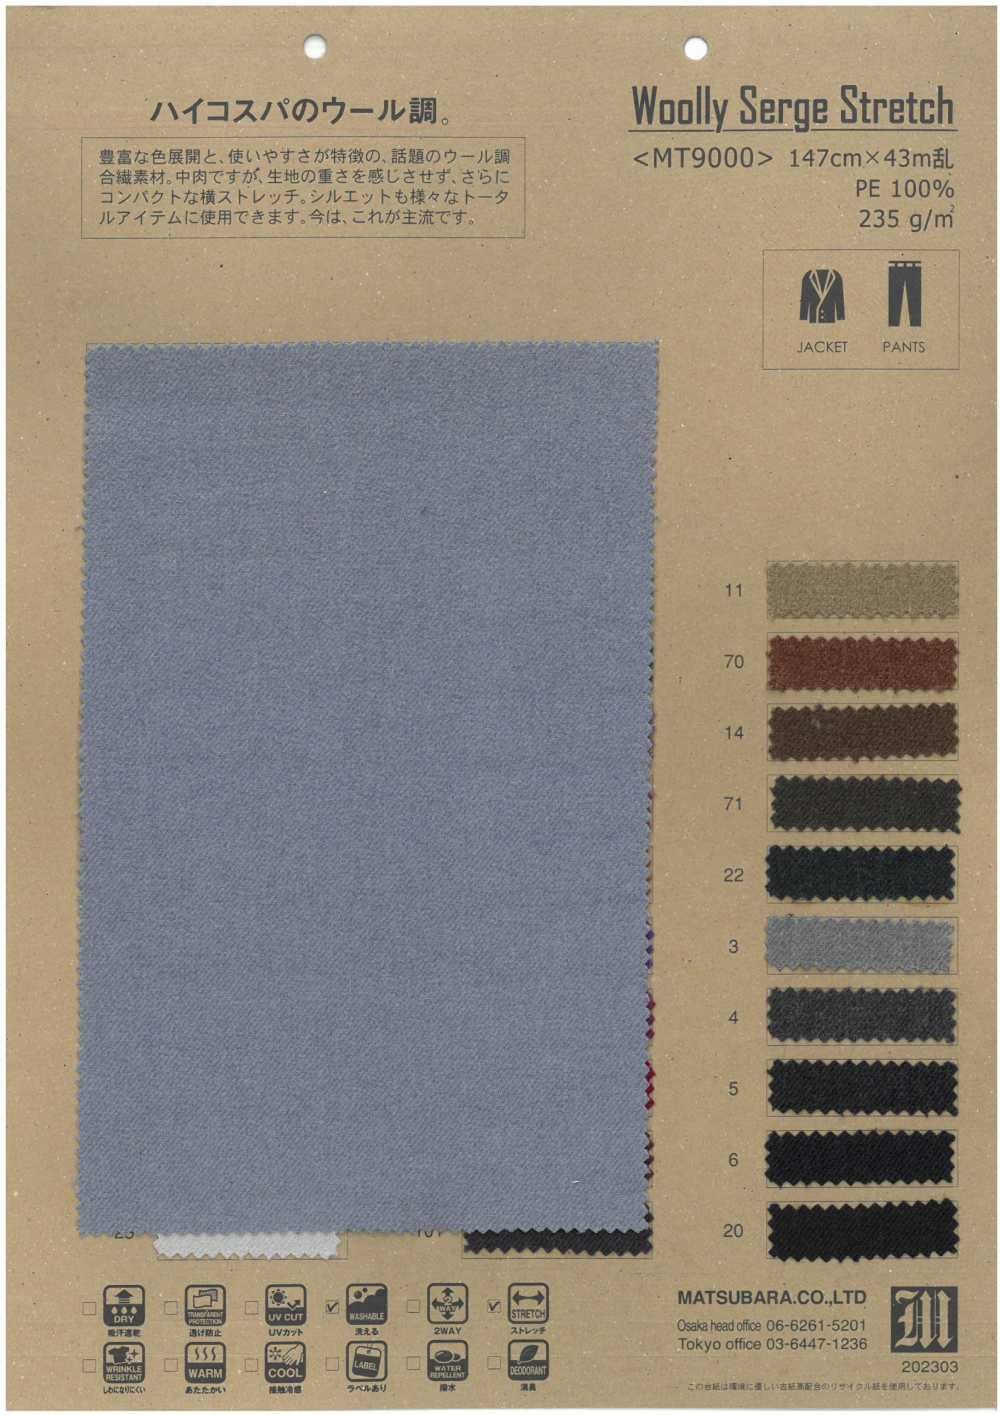 MT9000 Woolly Serge Stretch[Textile / Fabric] Matsubara